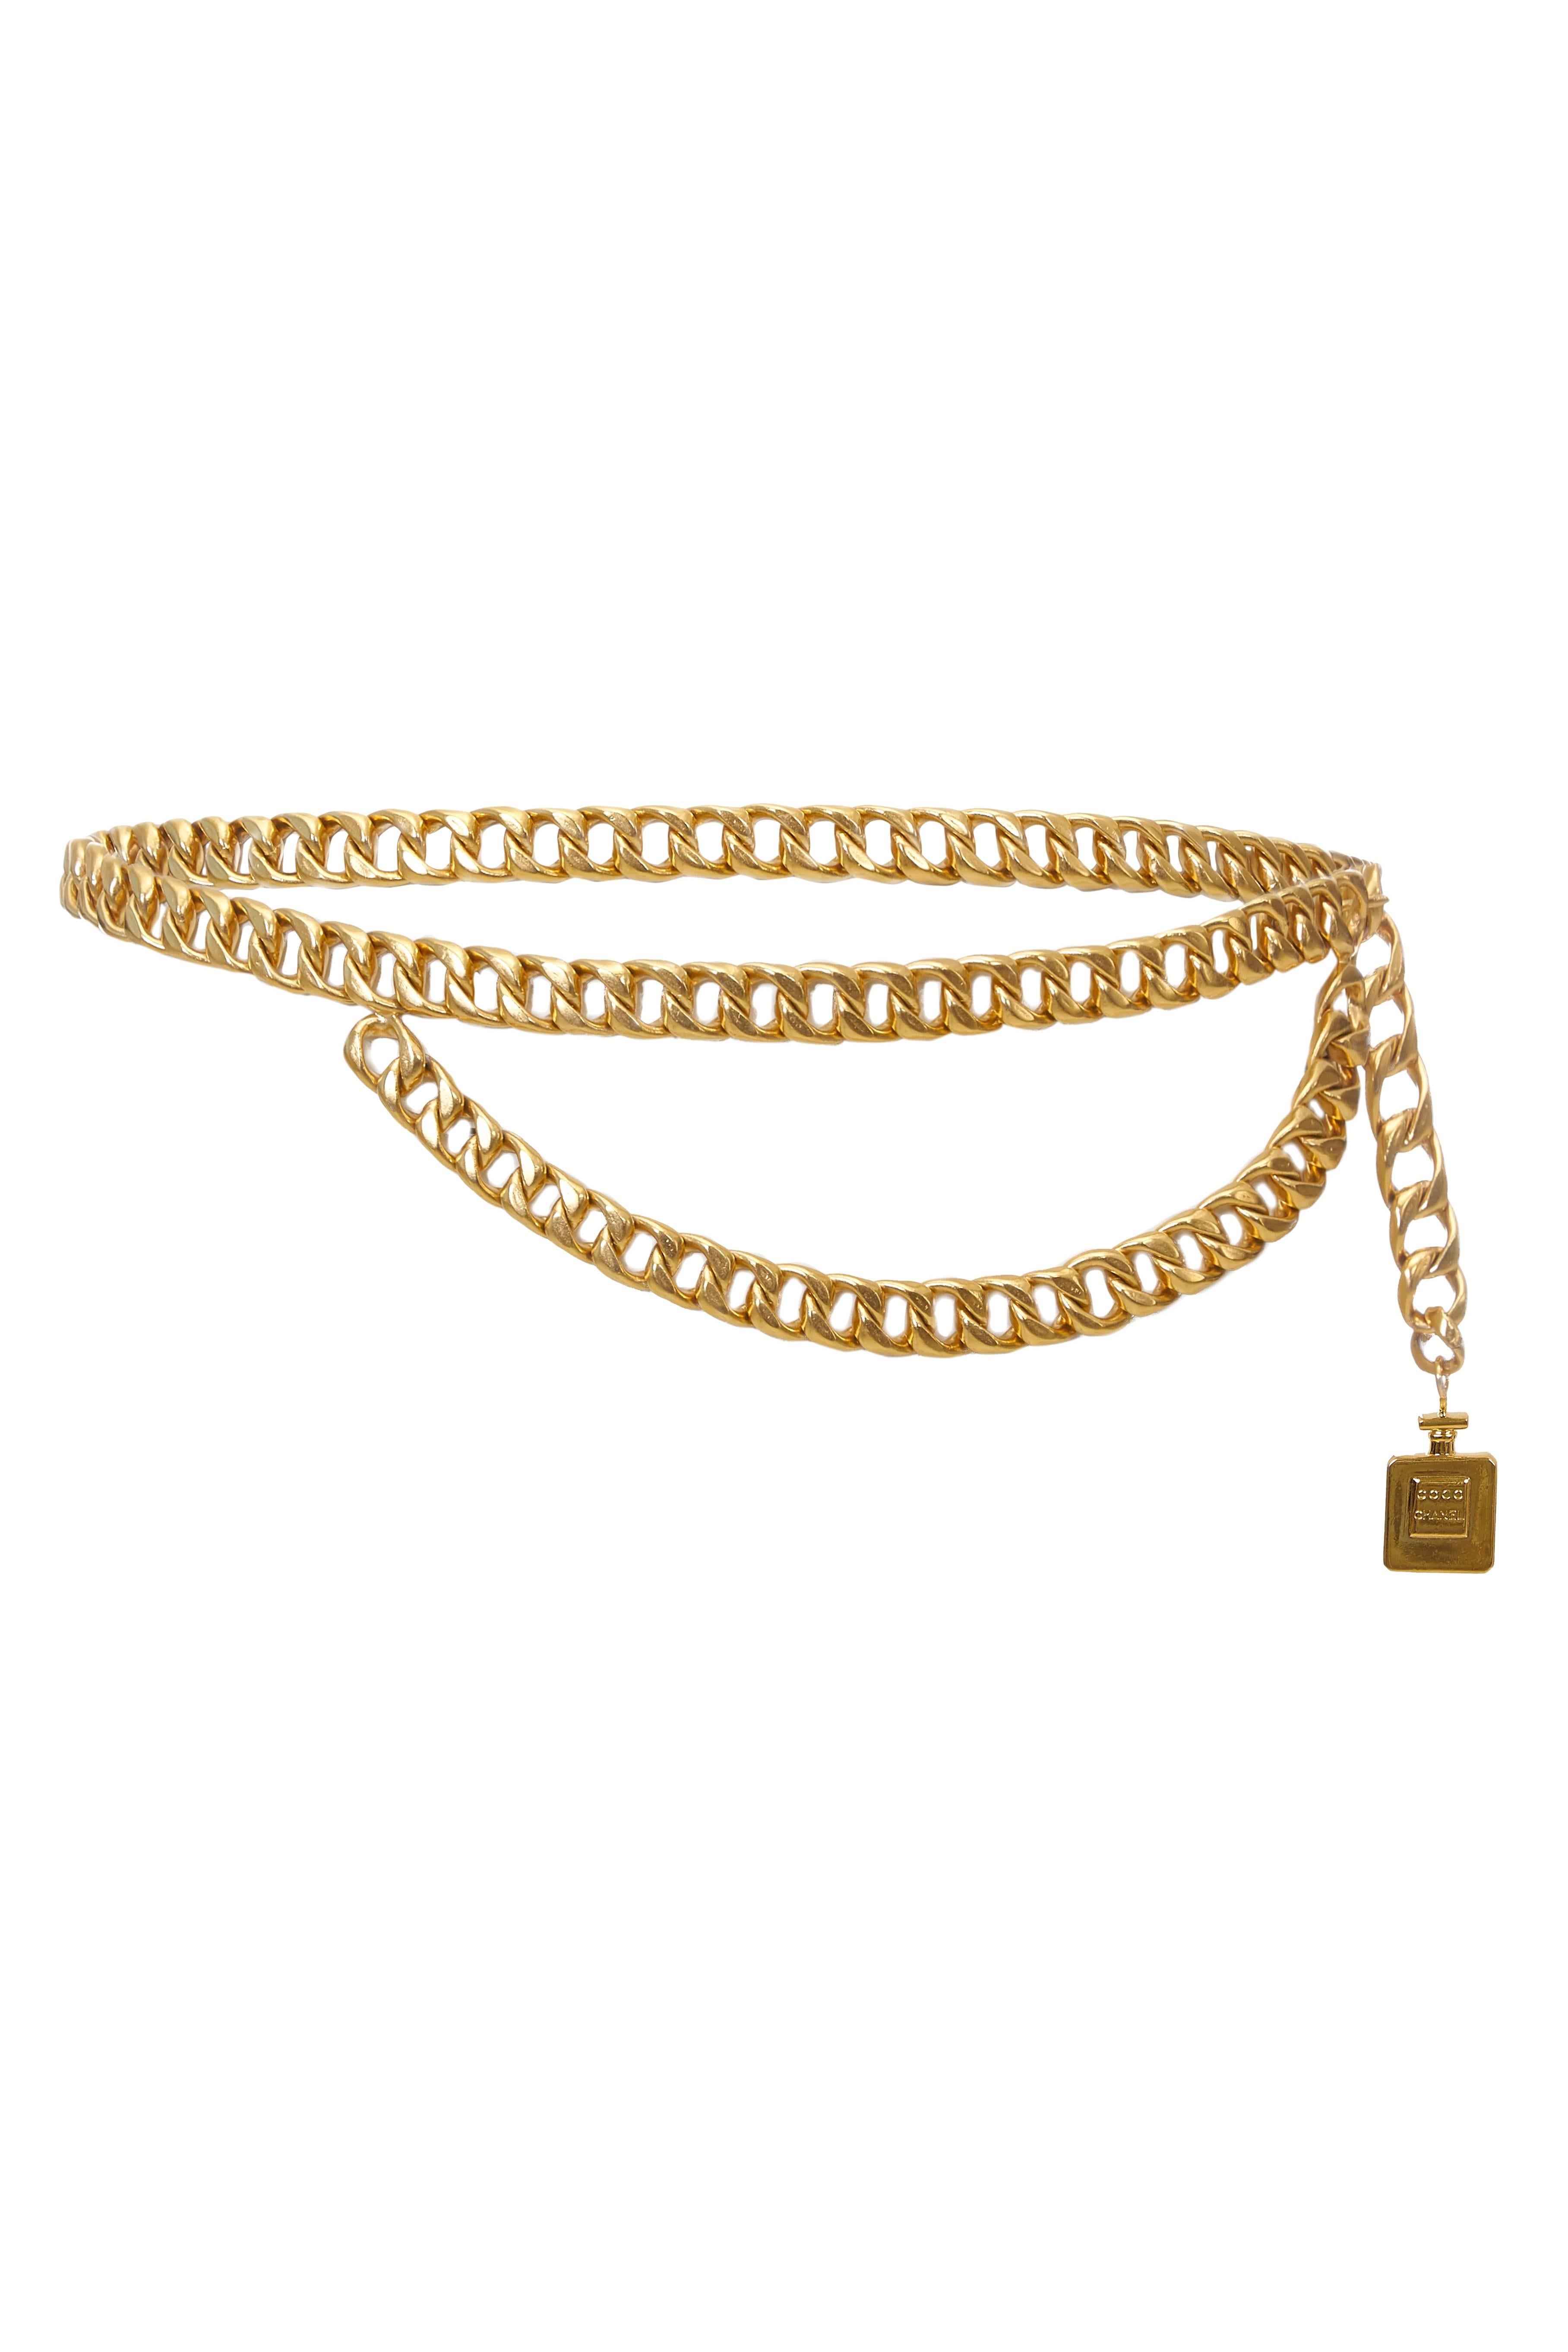 coco chanel chain belt